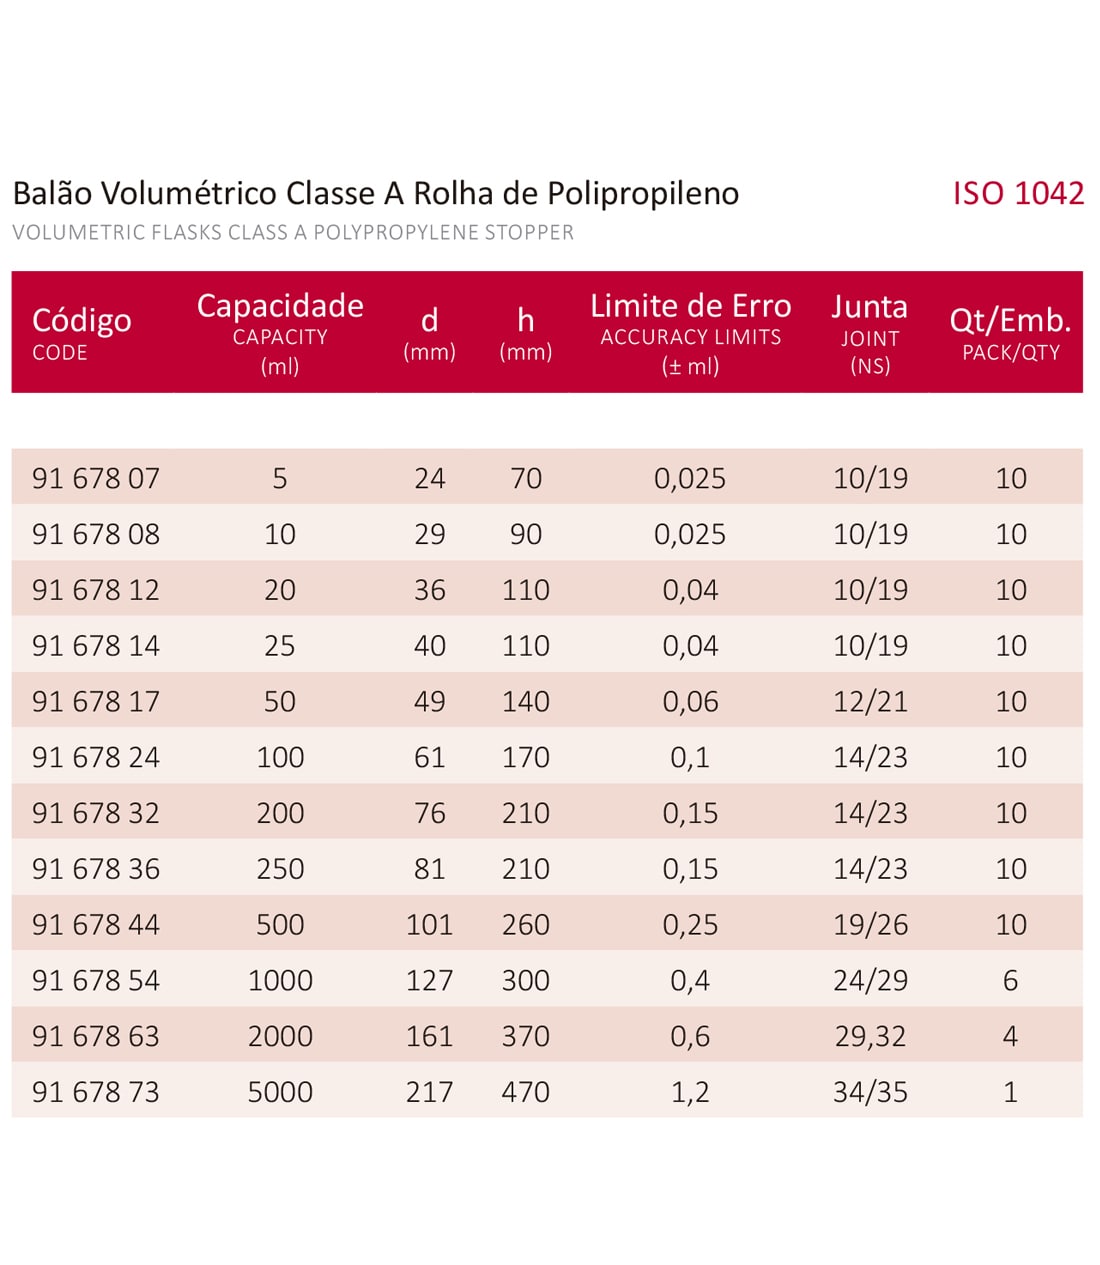 BALÃO VOLUMÉTRICO CLASSE A ROLHA POLI C/ CERTIFICADO RBC 10 ML - Marca Laborglas - Cód. 9167808-R